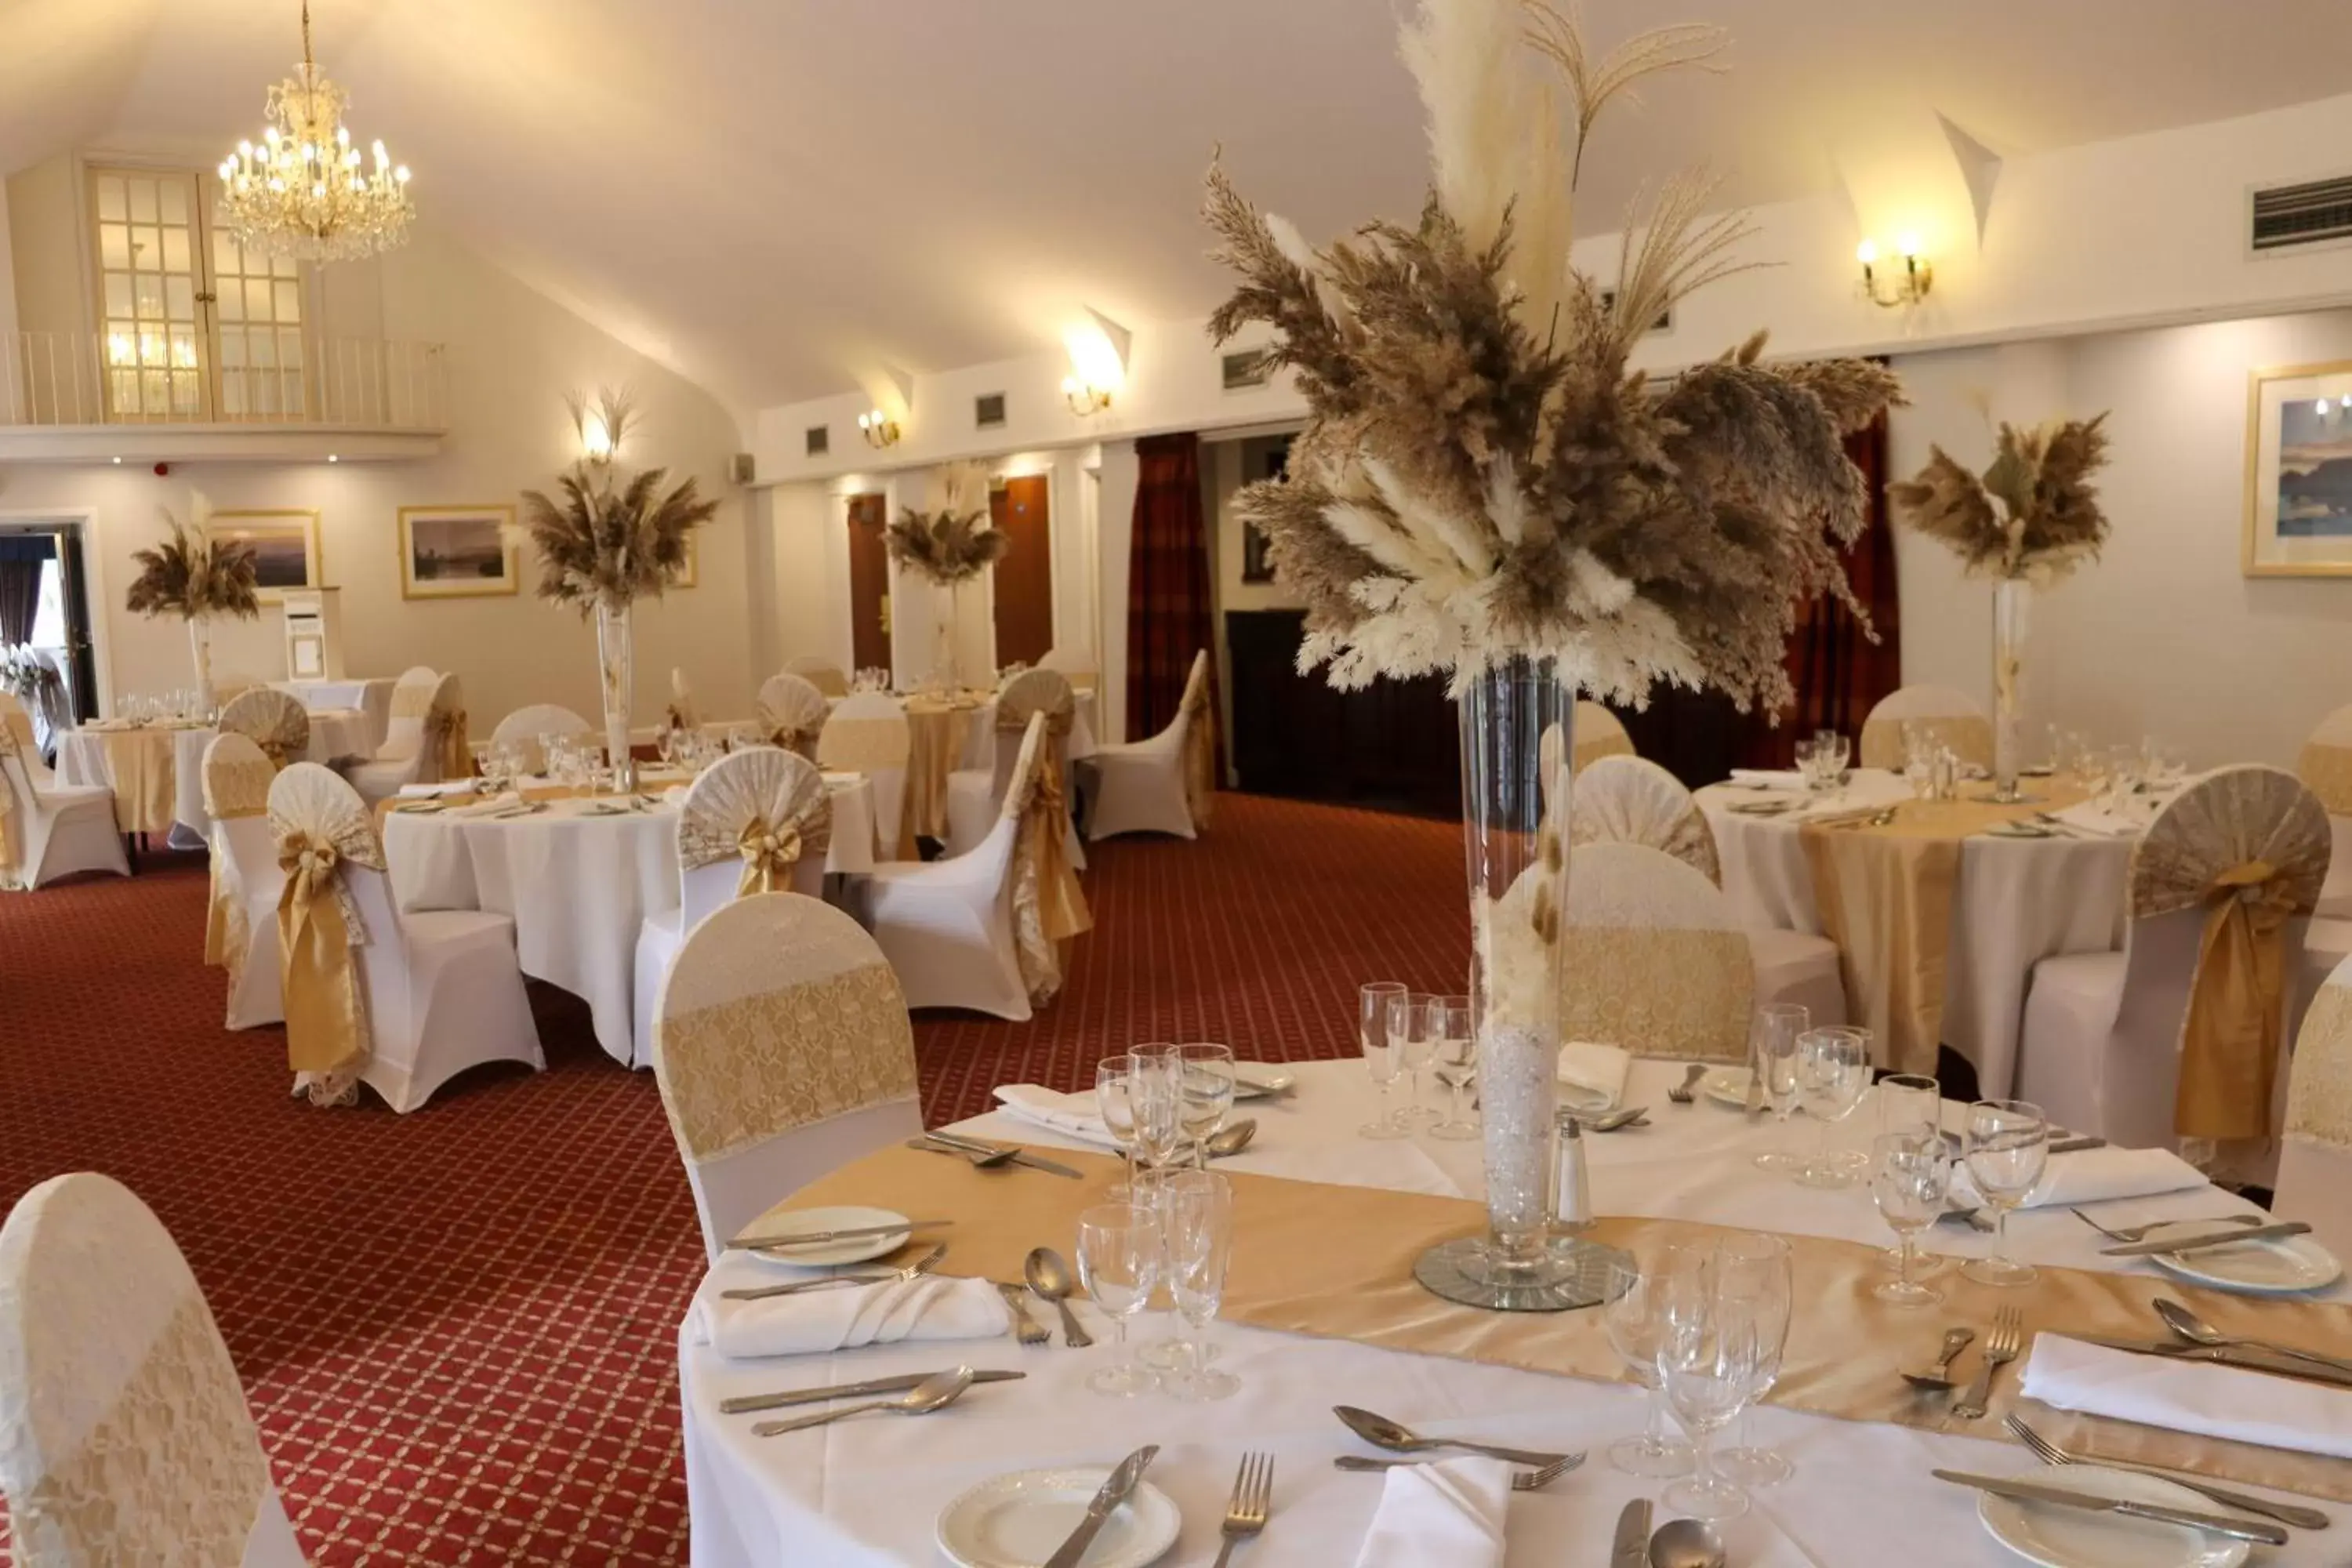 Banquet/Function facilities, Banquet Facilities in Best Western Heronston Hotel & Spa